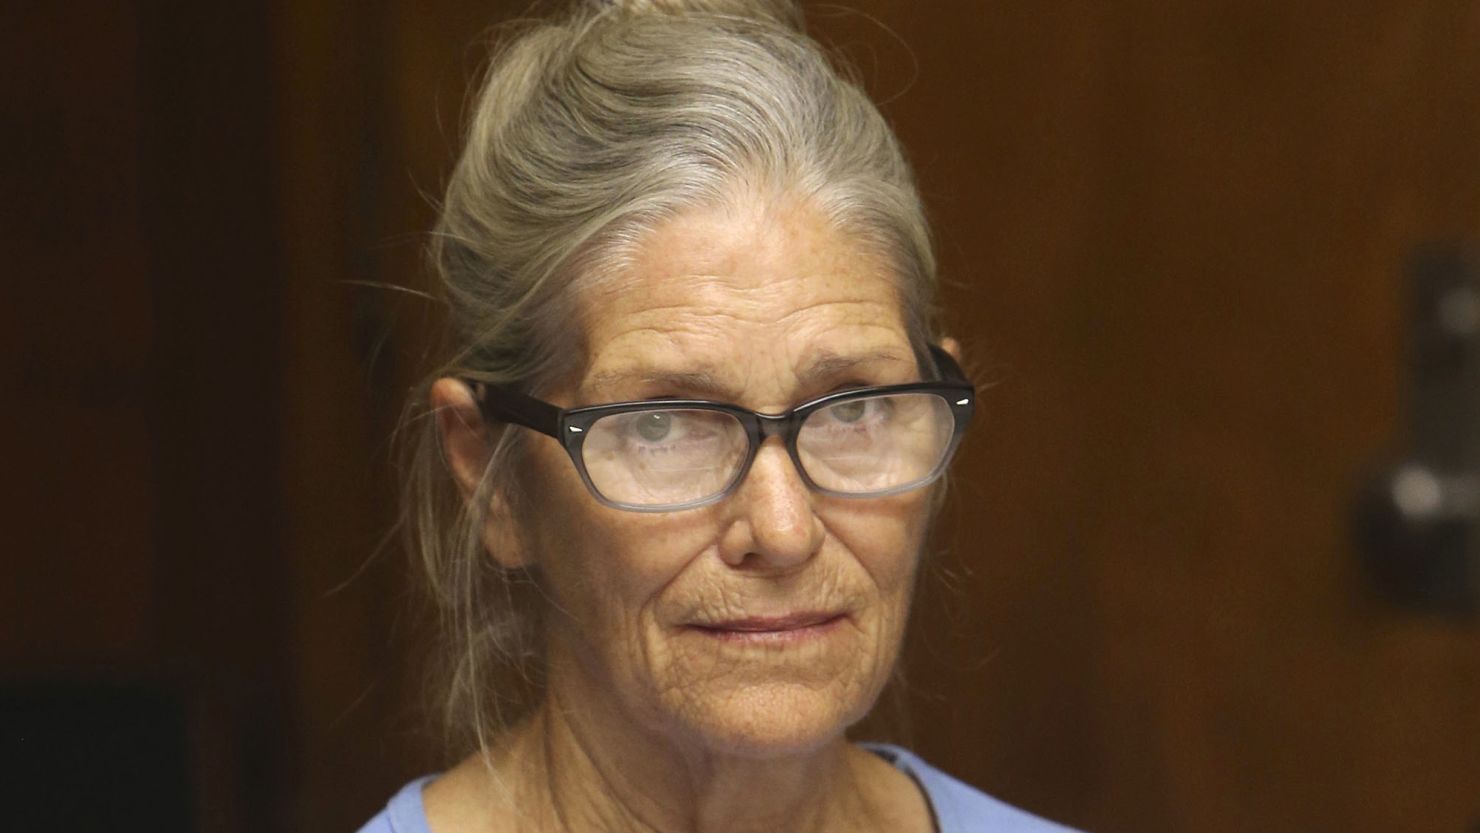 Leslie Van Houten attends a parole hearing in 2017 in Corona, California. 